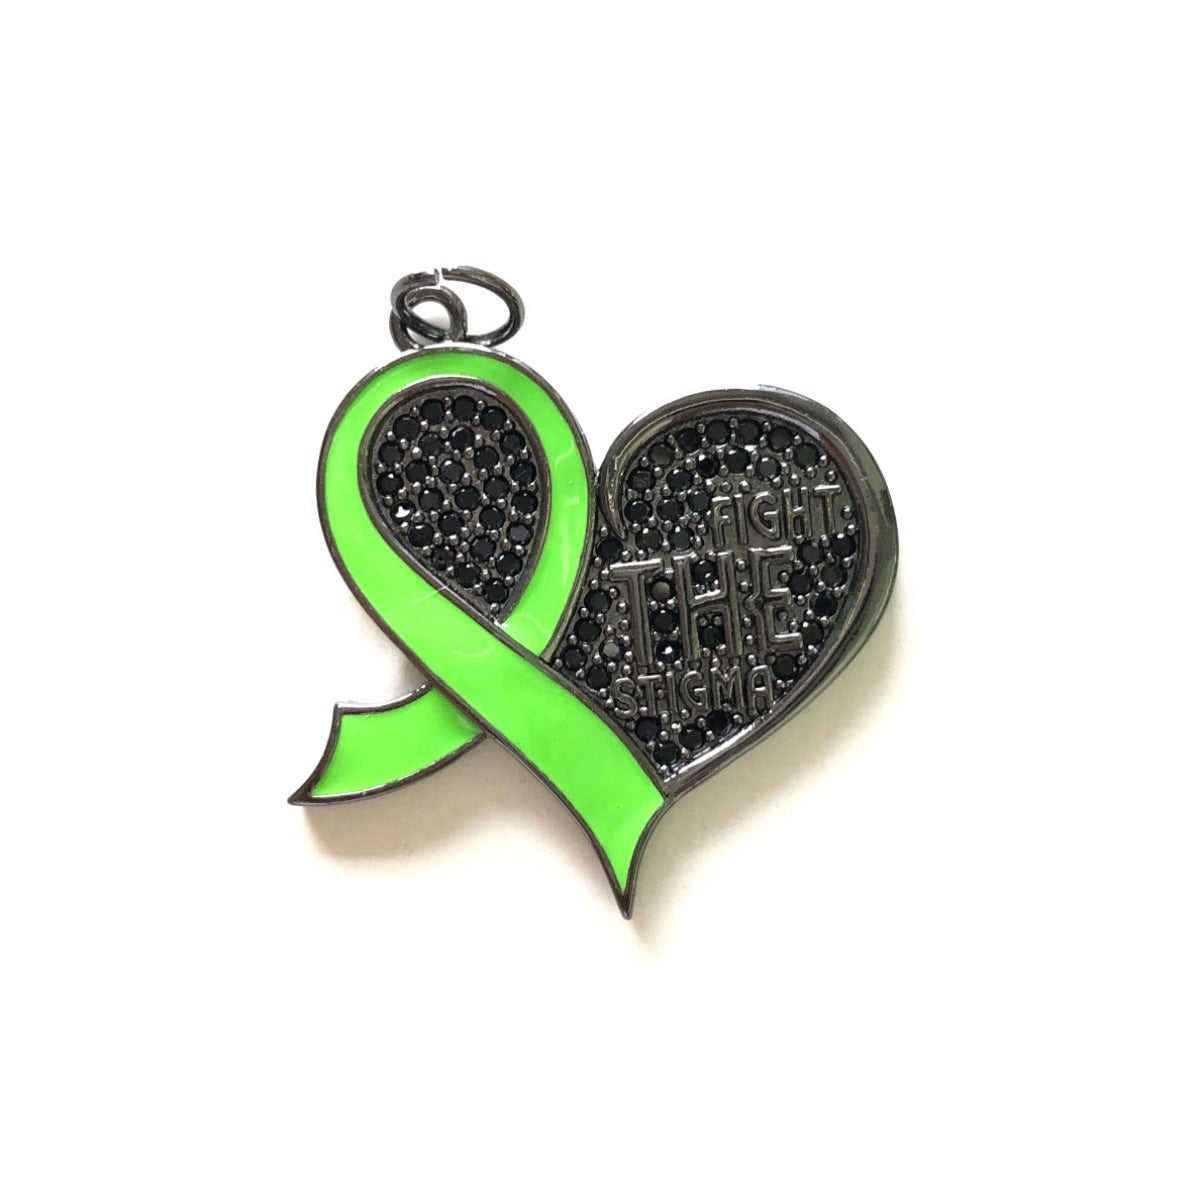 10pcs/lot CZ Pave Green Ribbon Fight The Stigma Mental Health Awareness Heart Charms Black on Black CZ Paved Charms Hearts New Charms Arrivals Charms Beads Beyond